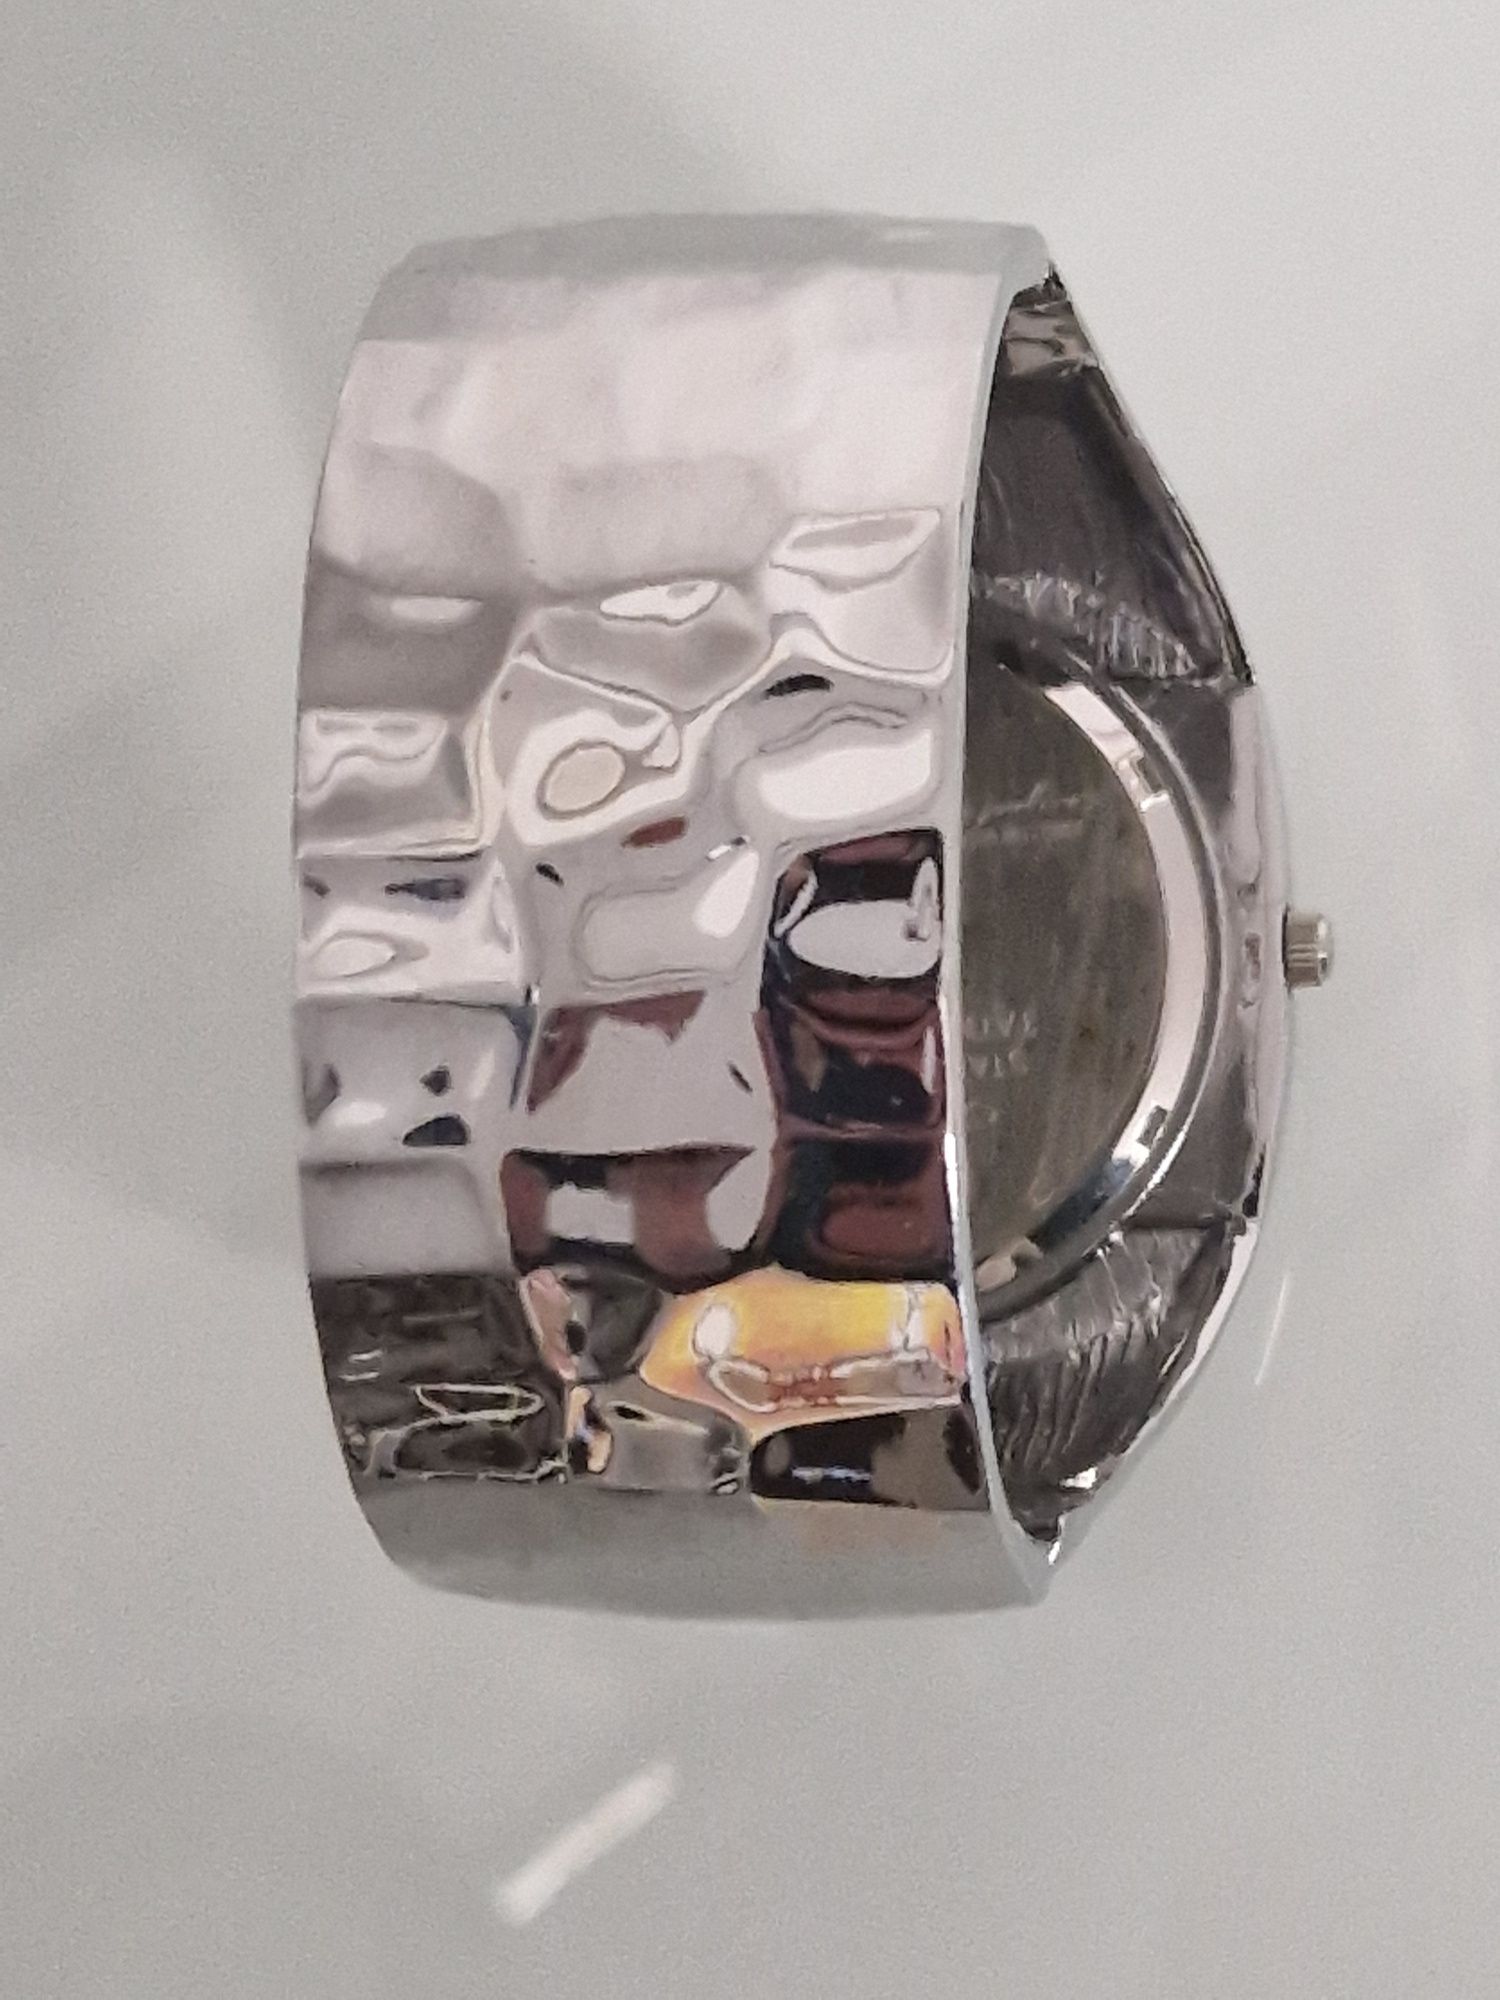 Relógio Silver - Jewelry Designer Cristian Lay